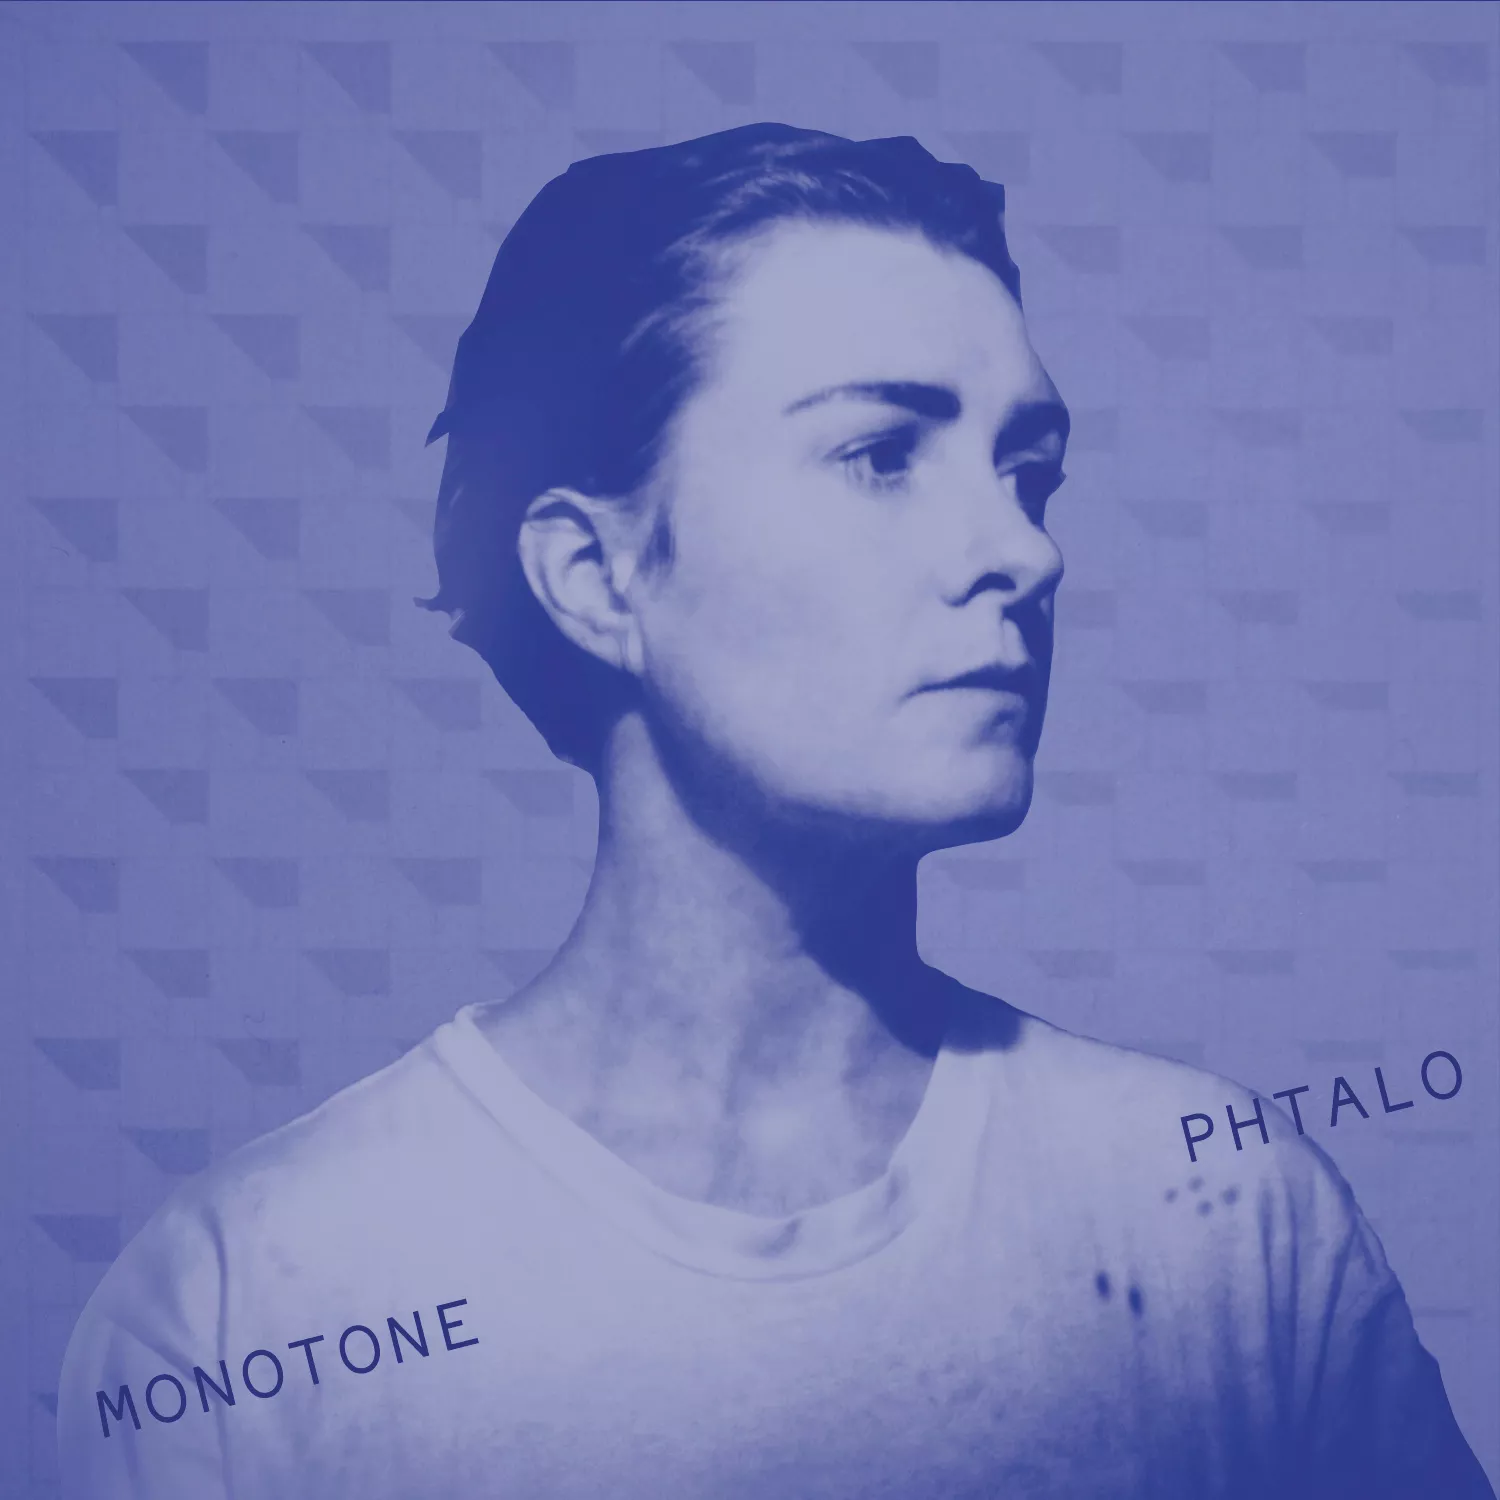 Monotone - Phtalo